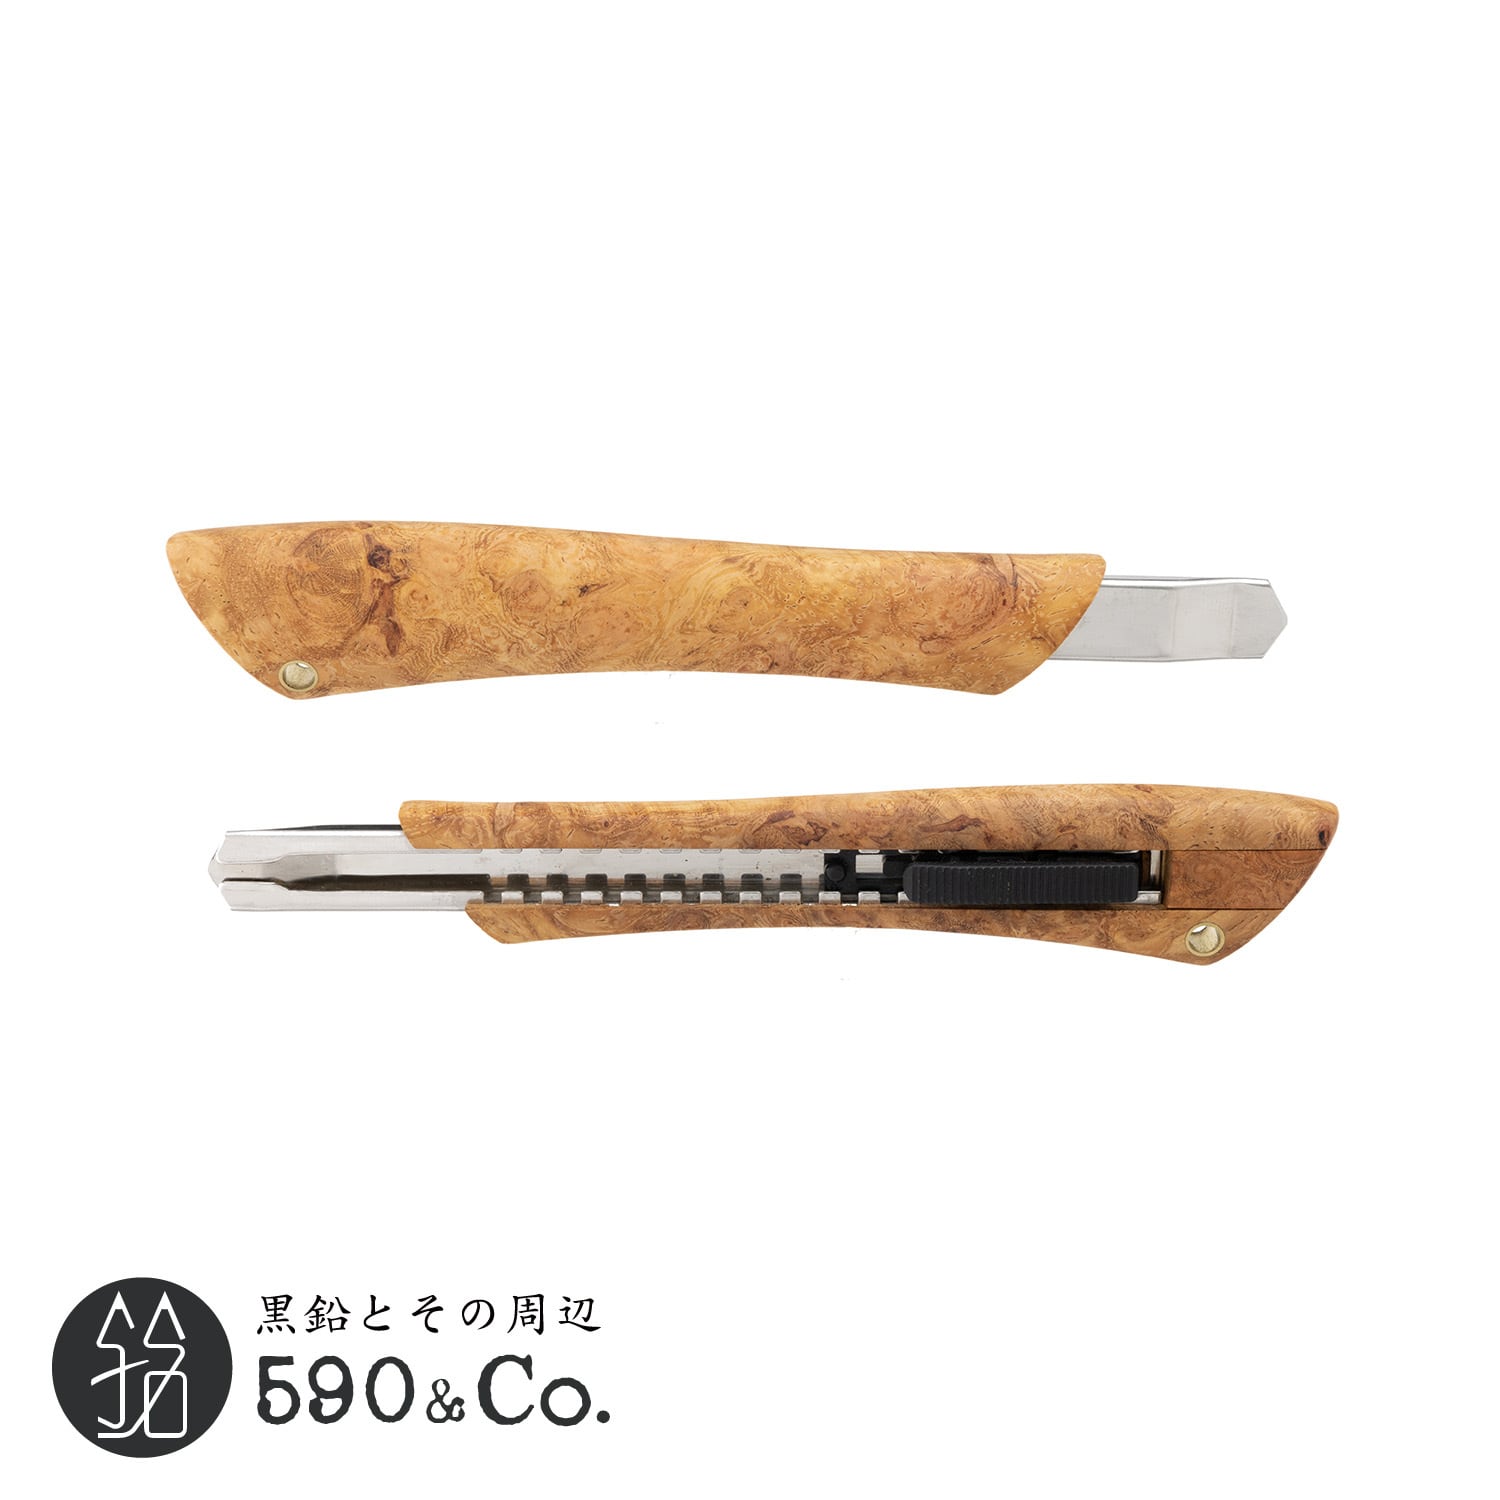 Flamberg/フランベルク】木製カッターナイフS型 (花梨瘤杢) A | 590&Co.